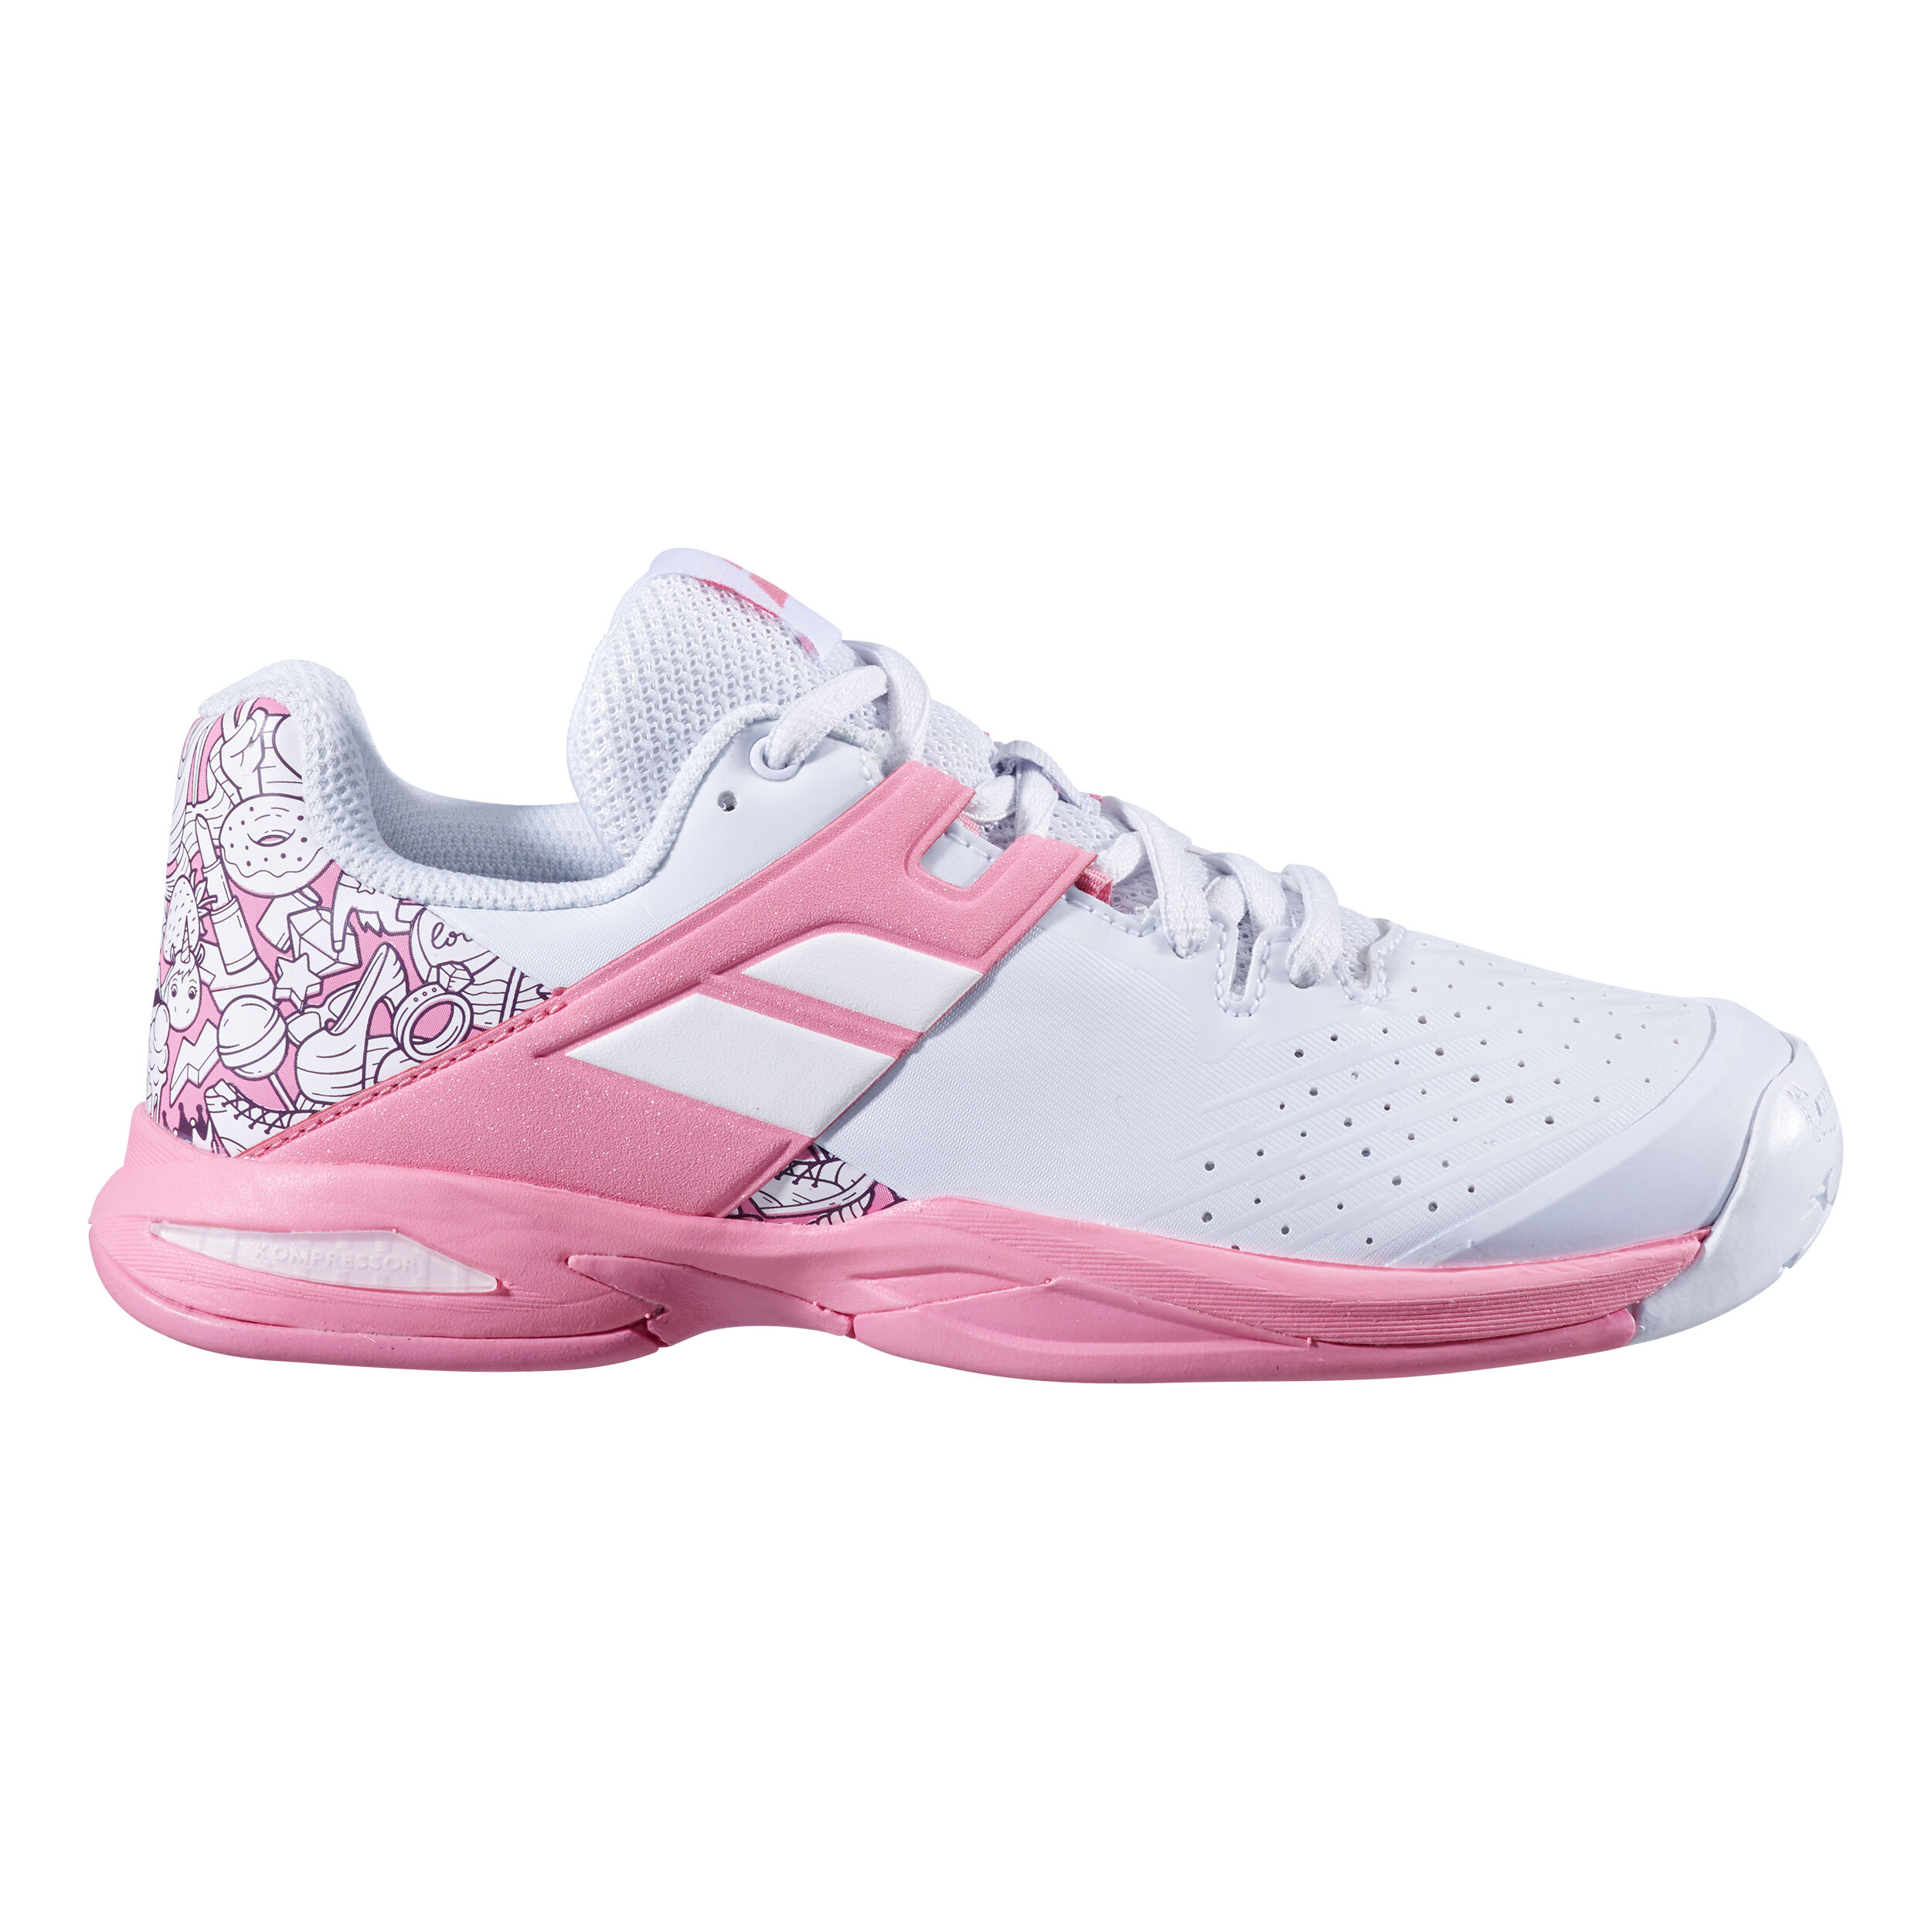 Wht/Pink kids Propulse Team Jnr UK 4.5 EUR 37 New in Box Babolat Babolat Tennis Shoe 